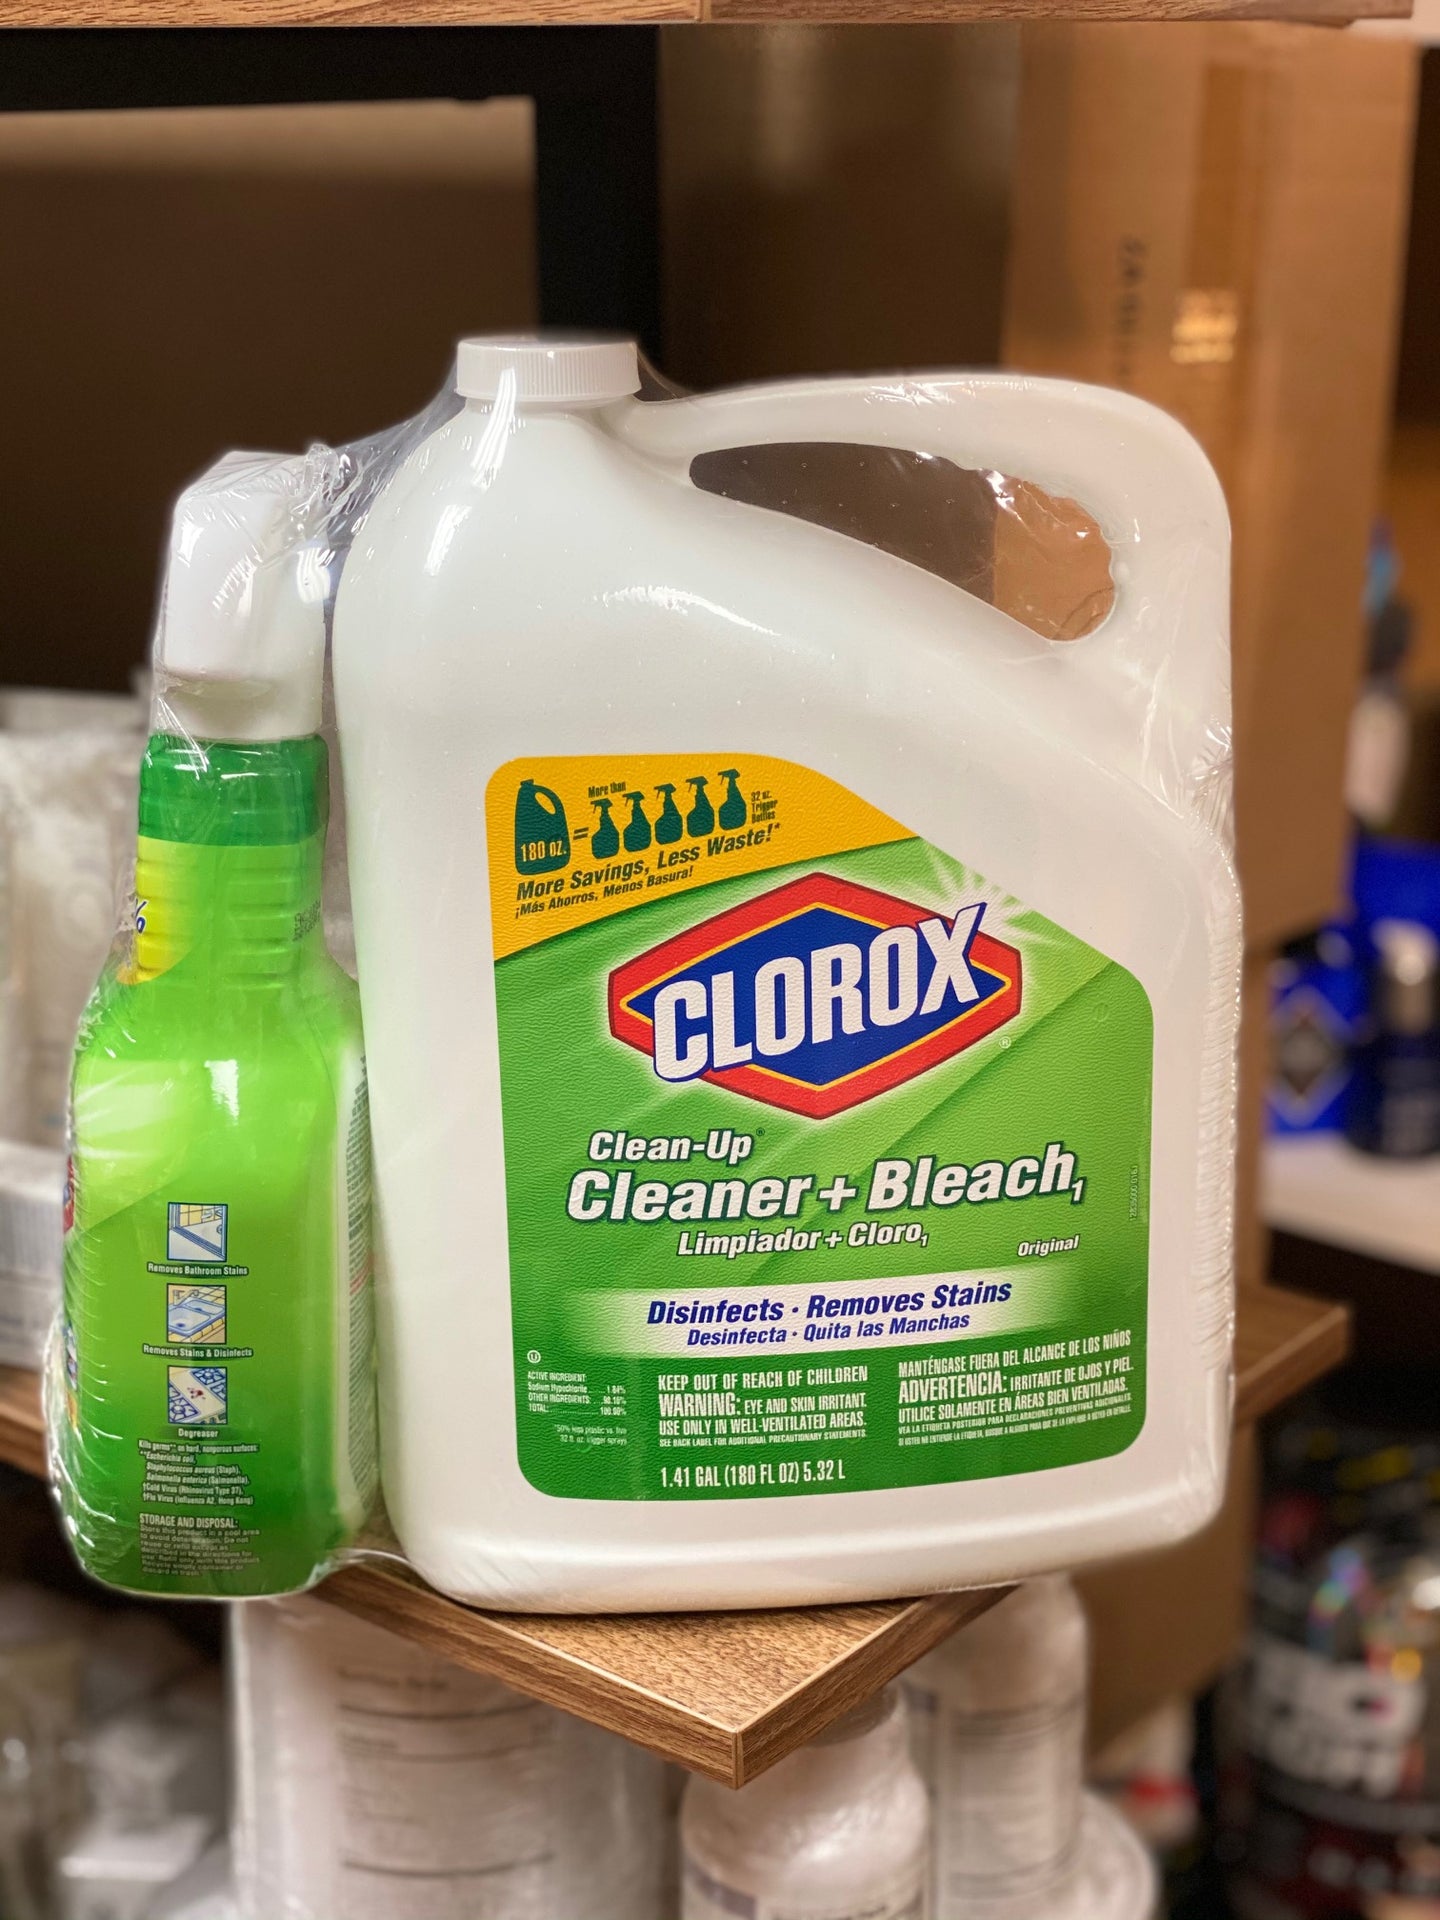 Clorox Clean-Up Cleaner with Bleach